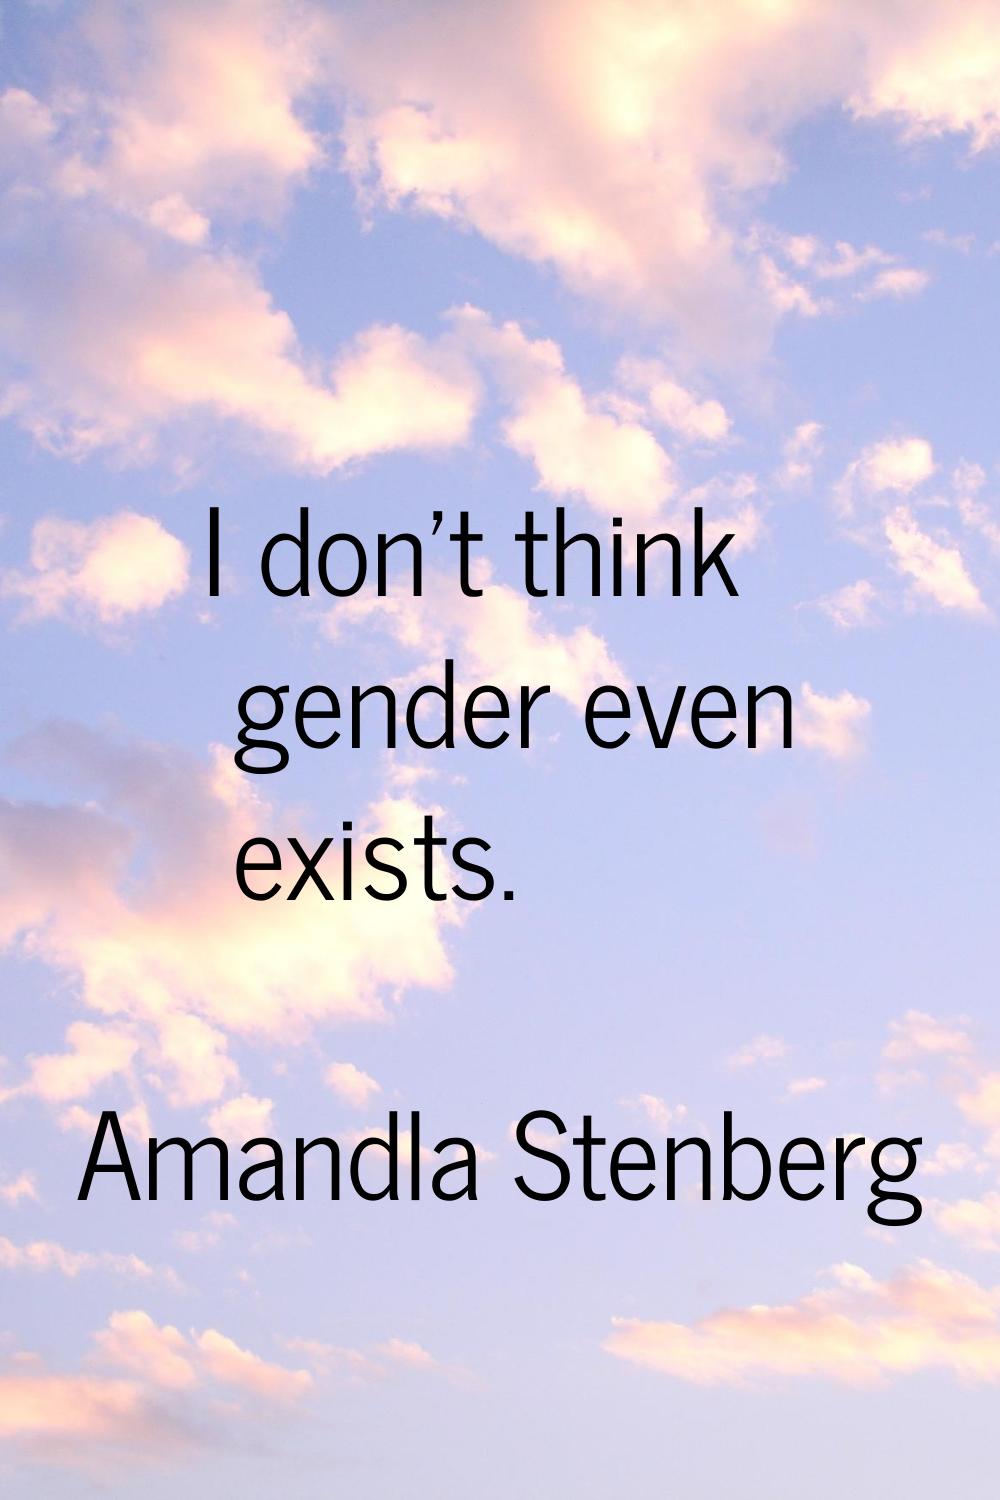 I don't think gender even exists.